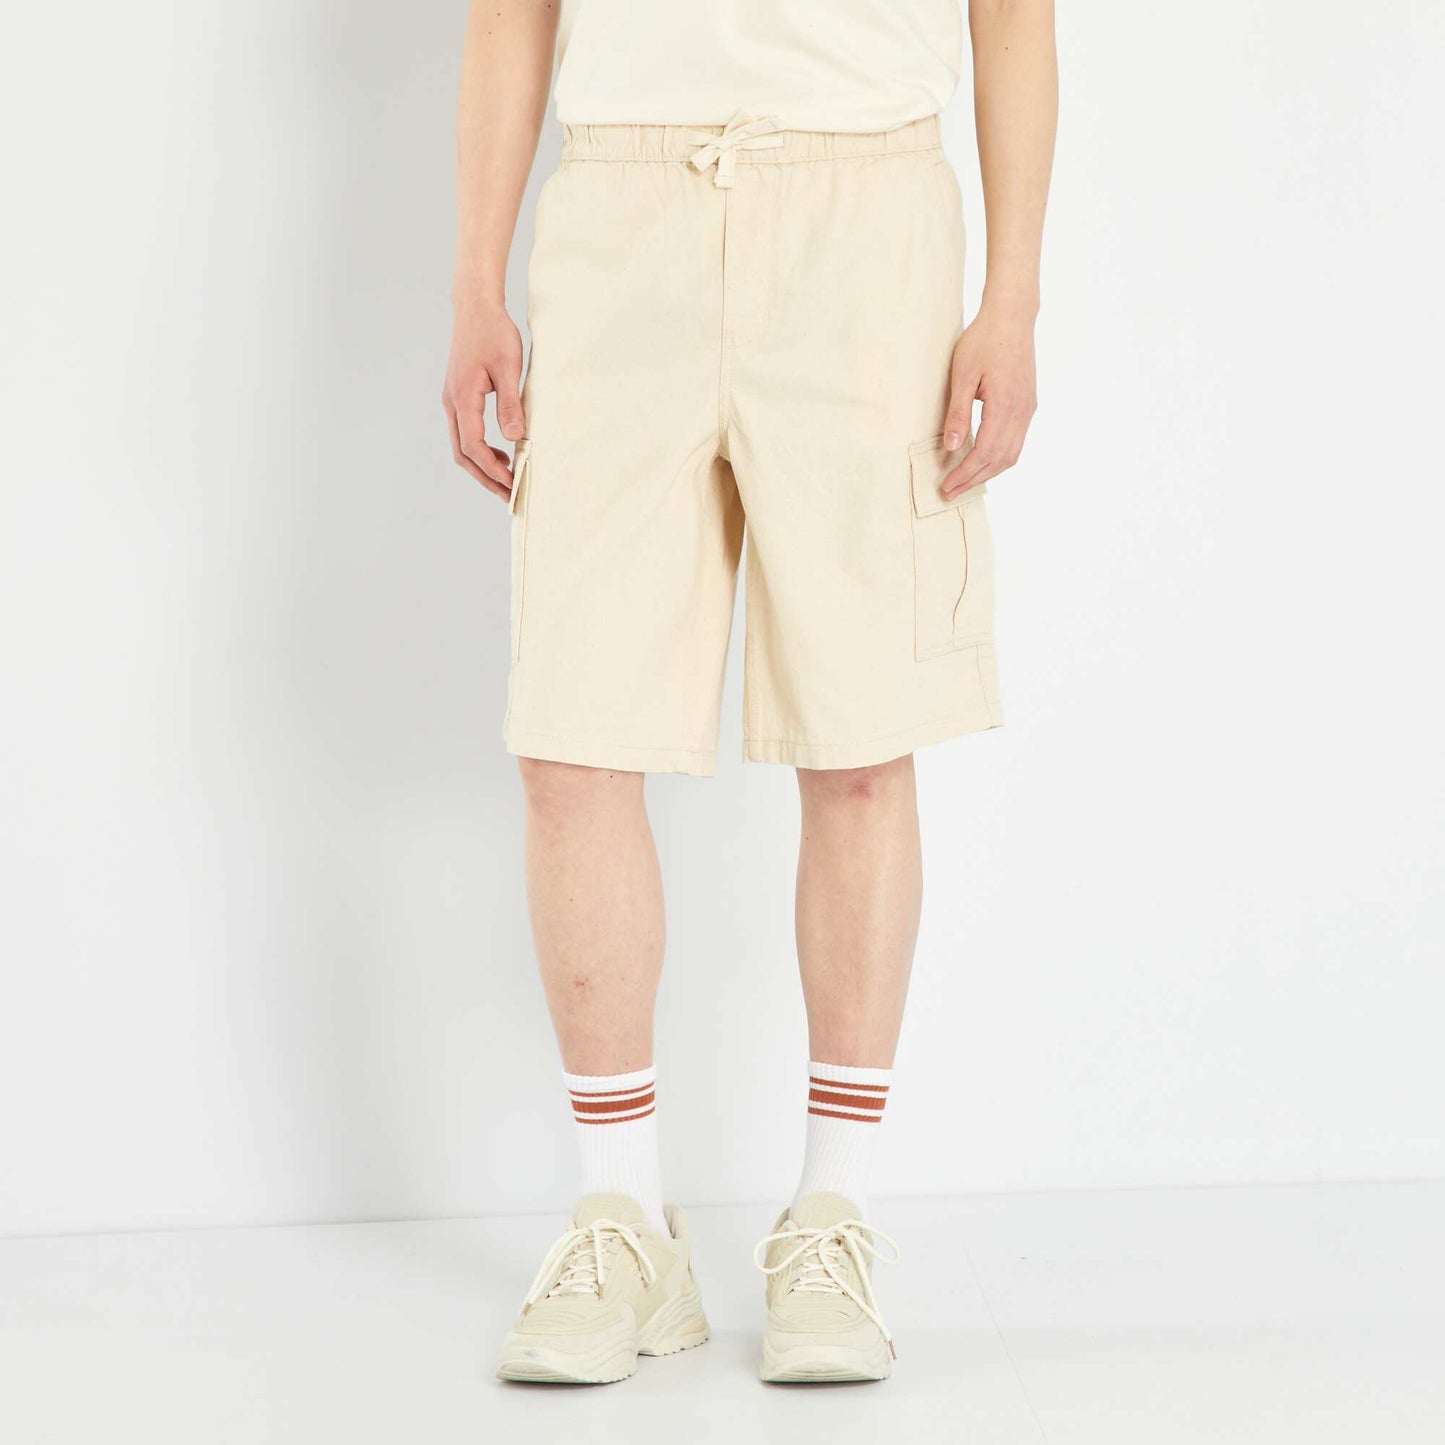 Flecked Bermuda shorts with pockets BEIGE